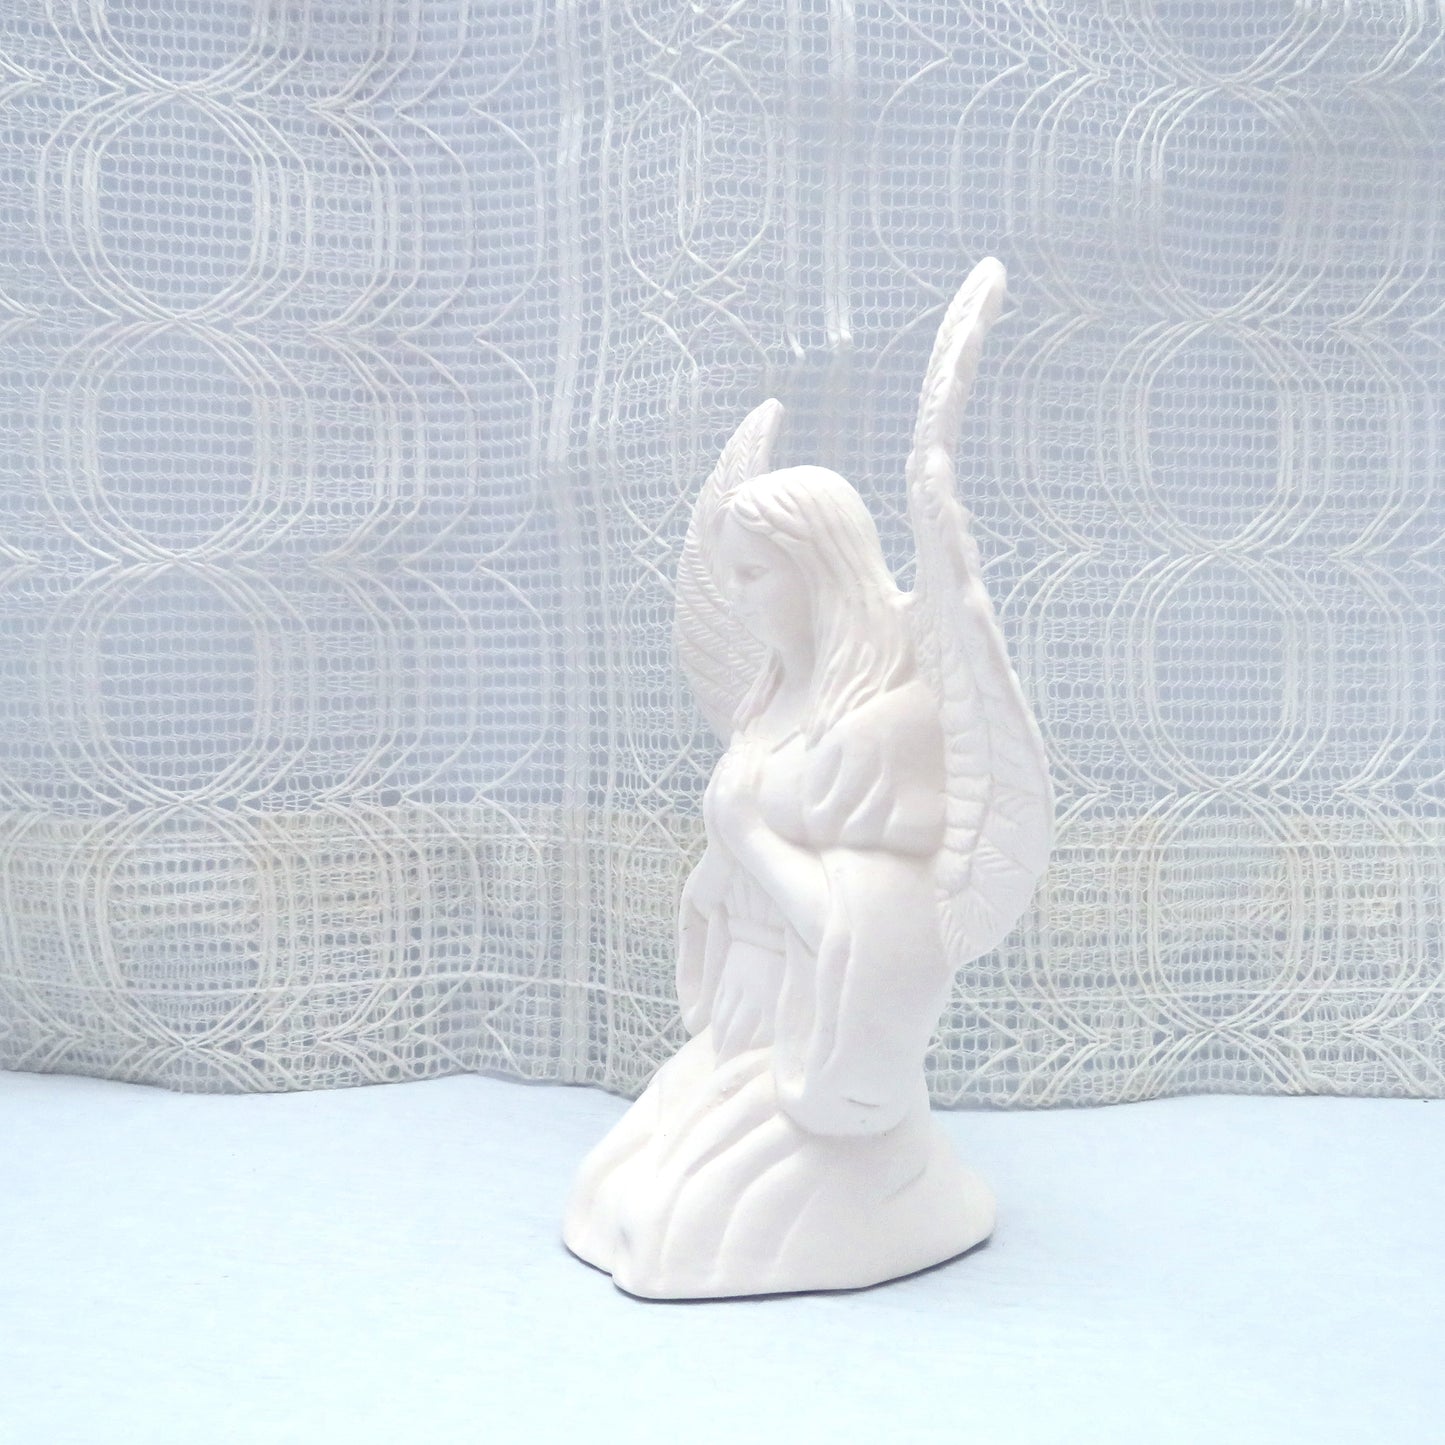 Handmade Paintable Ceramic Kneeling Angel Figurine, Unpainted Ceramic Kneeling Angel Statue